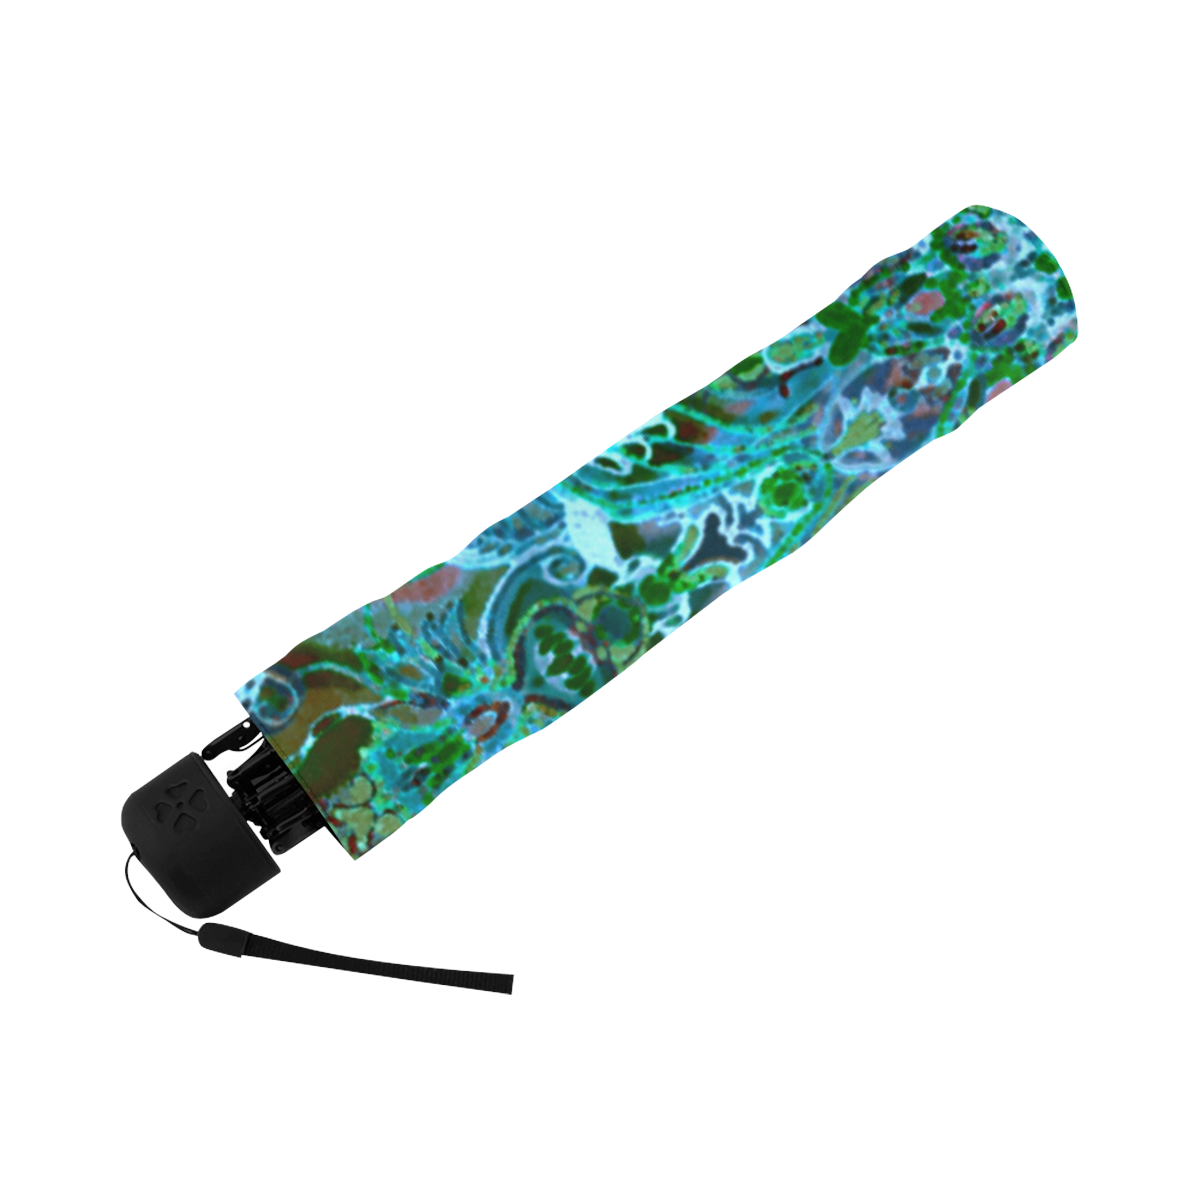 mandala 10 Anti-UV Foldable Umbrella (U08)